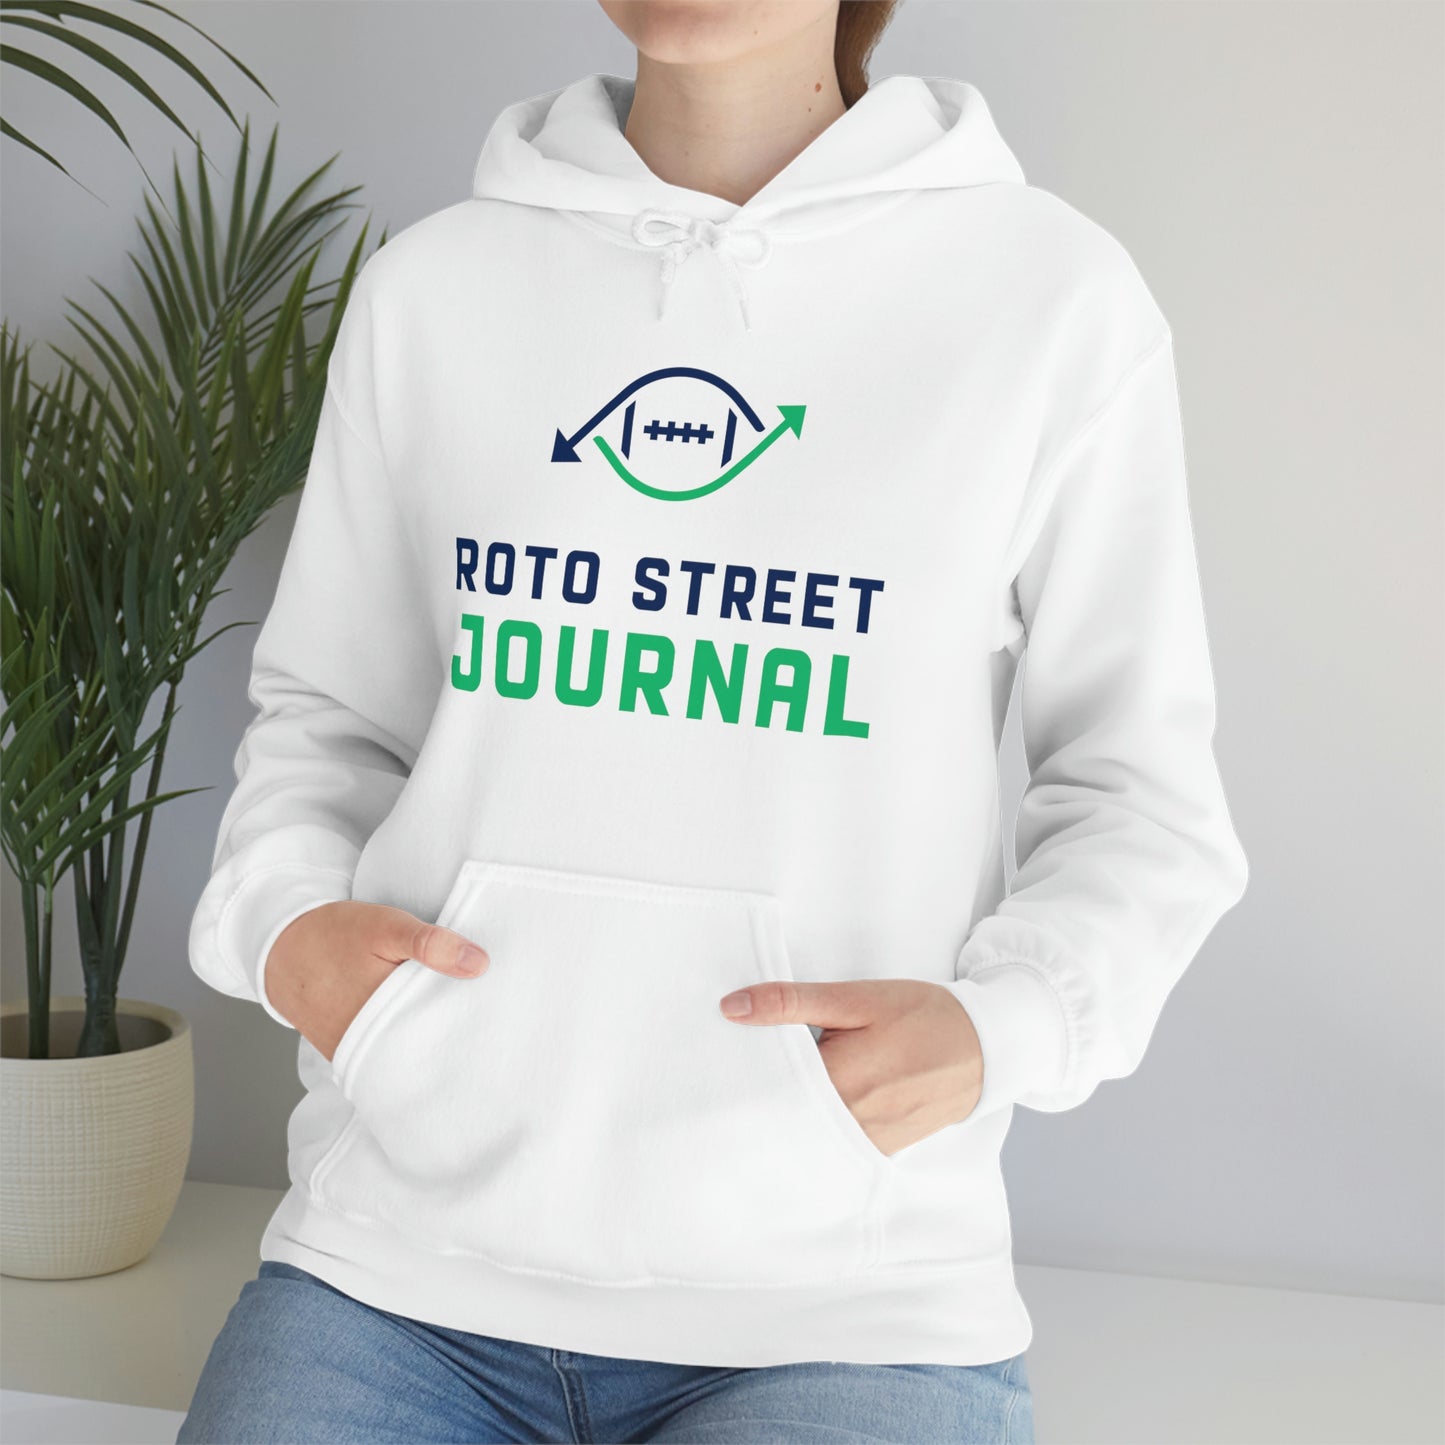 Roto Street Journal Hoodie Sweatshirt - Fantasy Football Sweatshirt